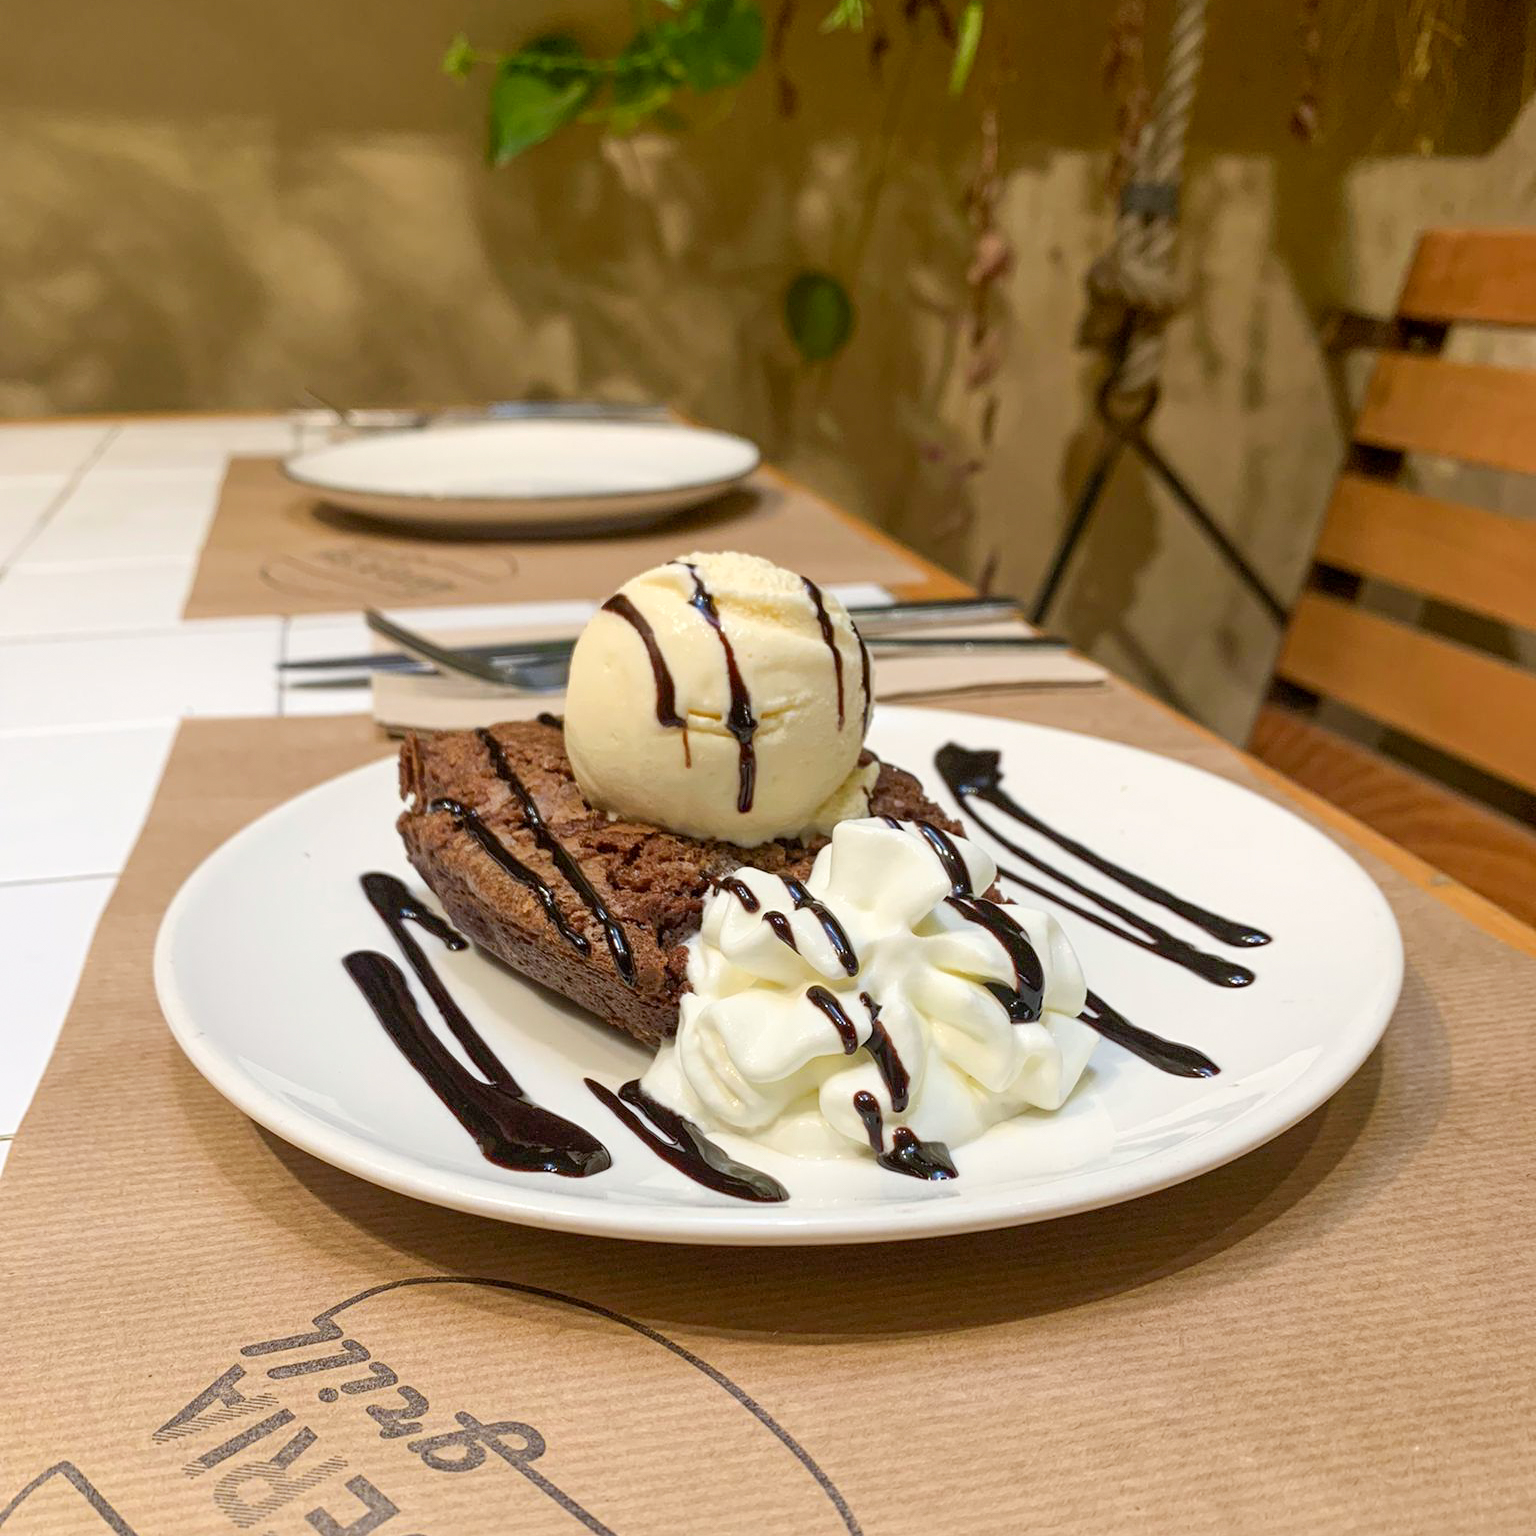 Chocolate and walnut brownie with vanilla ice cream